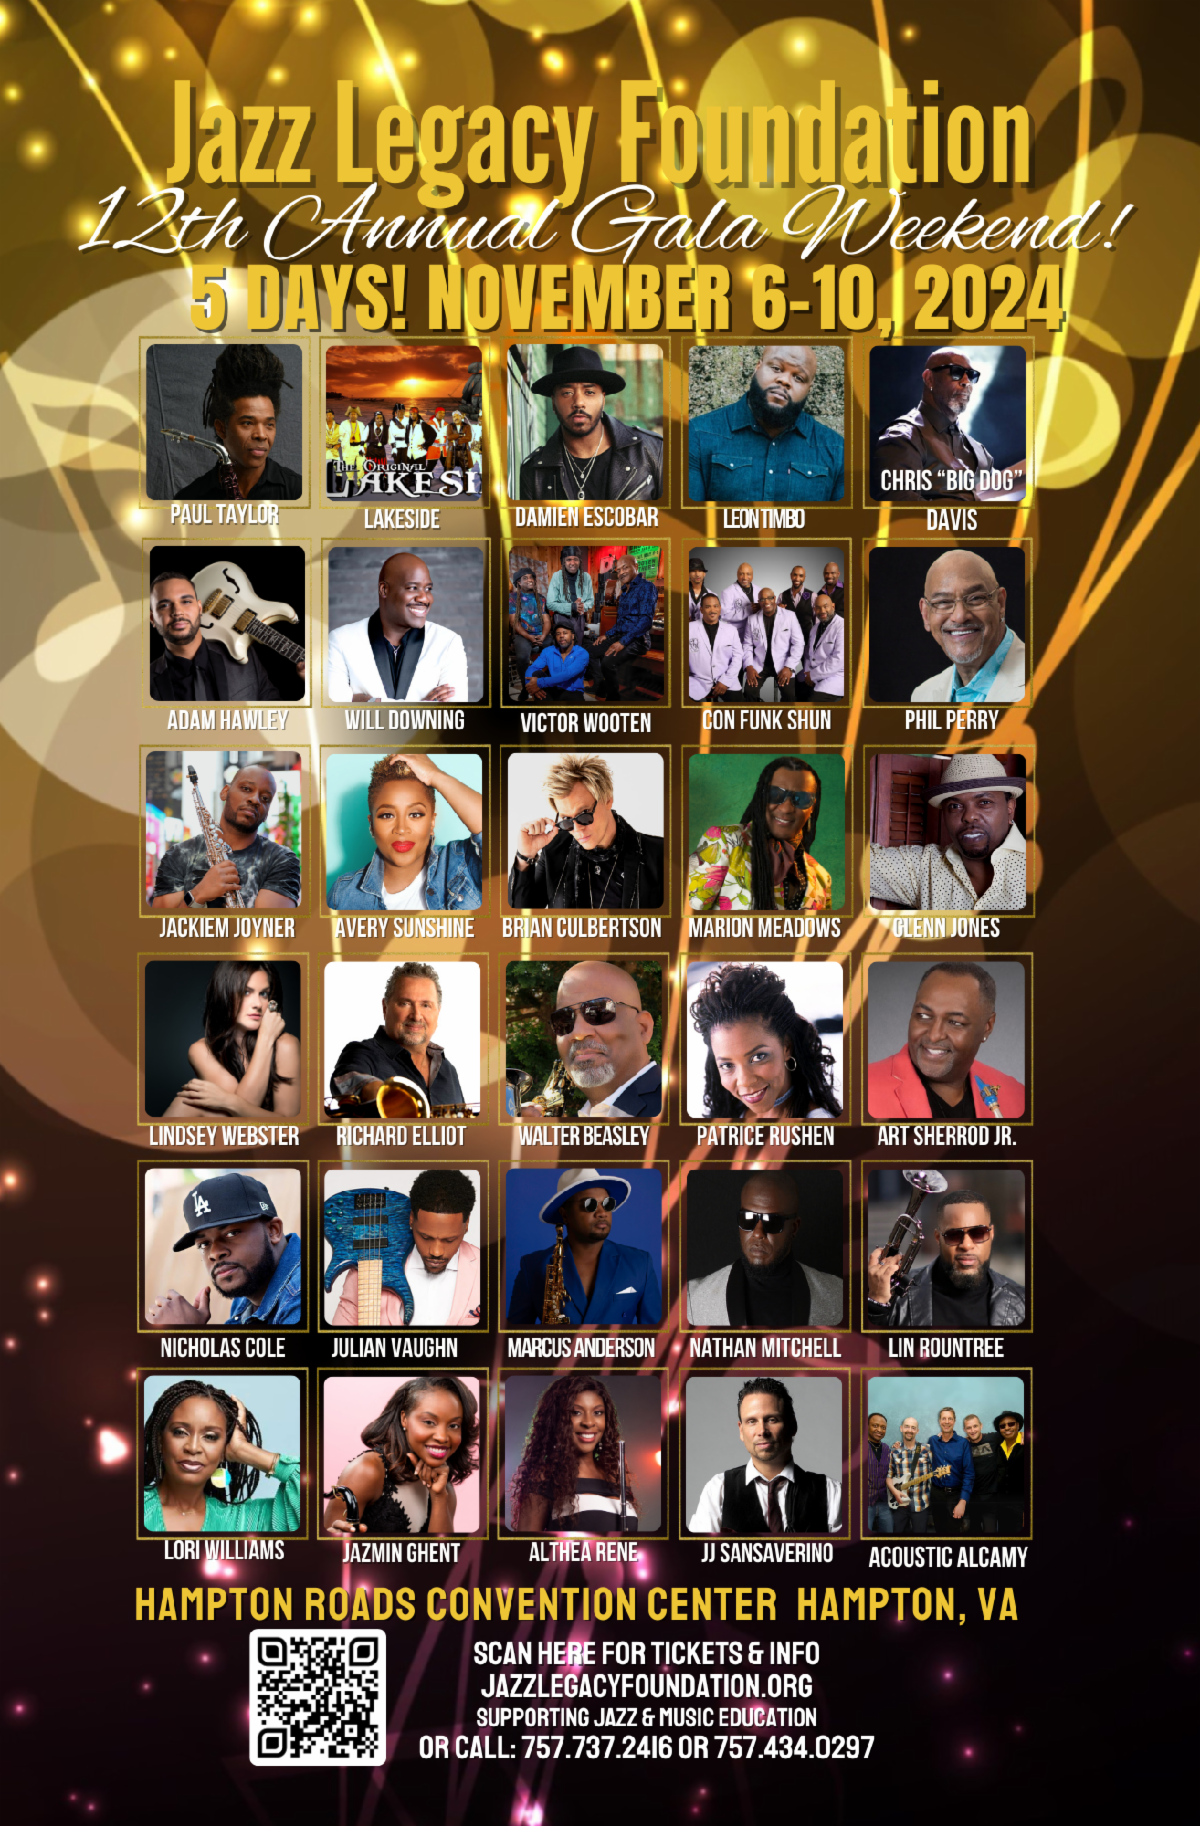 12th Annual Jazz Legacy Foundation Gala Weekend lineup